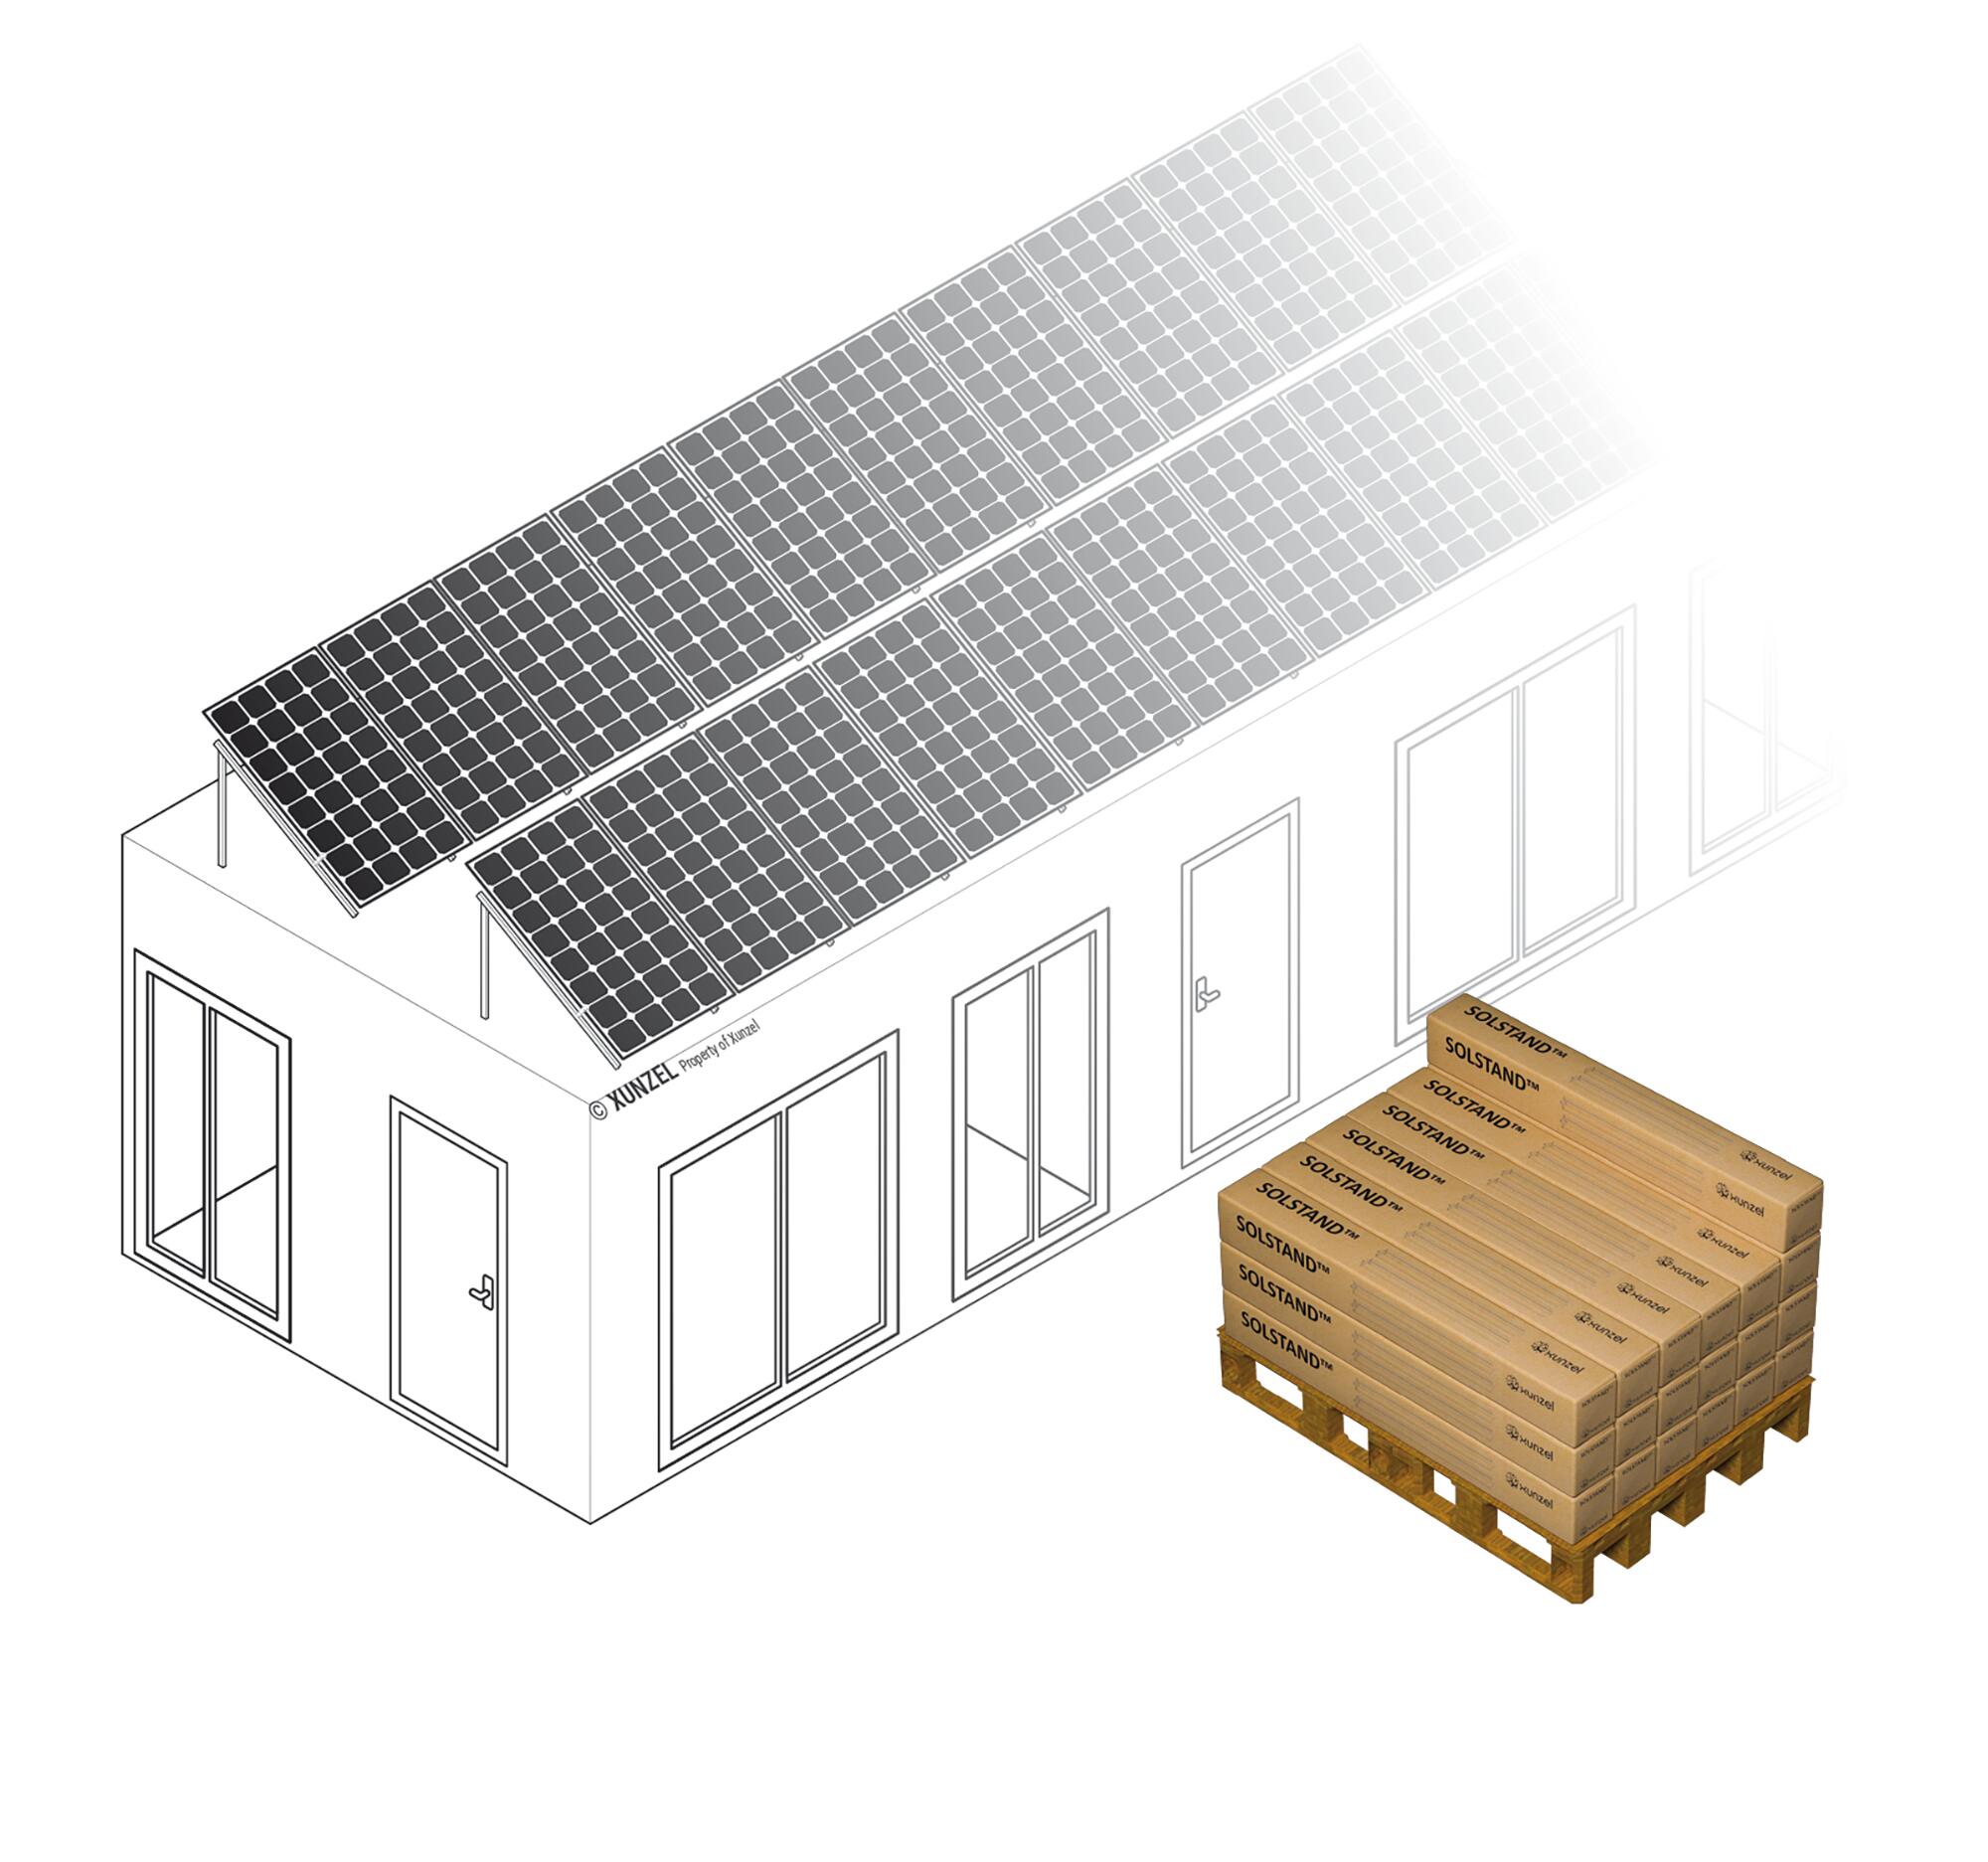 Soporte suelo/cubierta plana solstand-56g-xxl para 56 paneles solarpower-425w